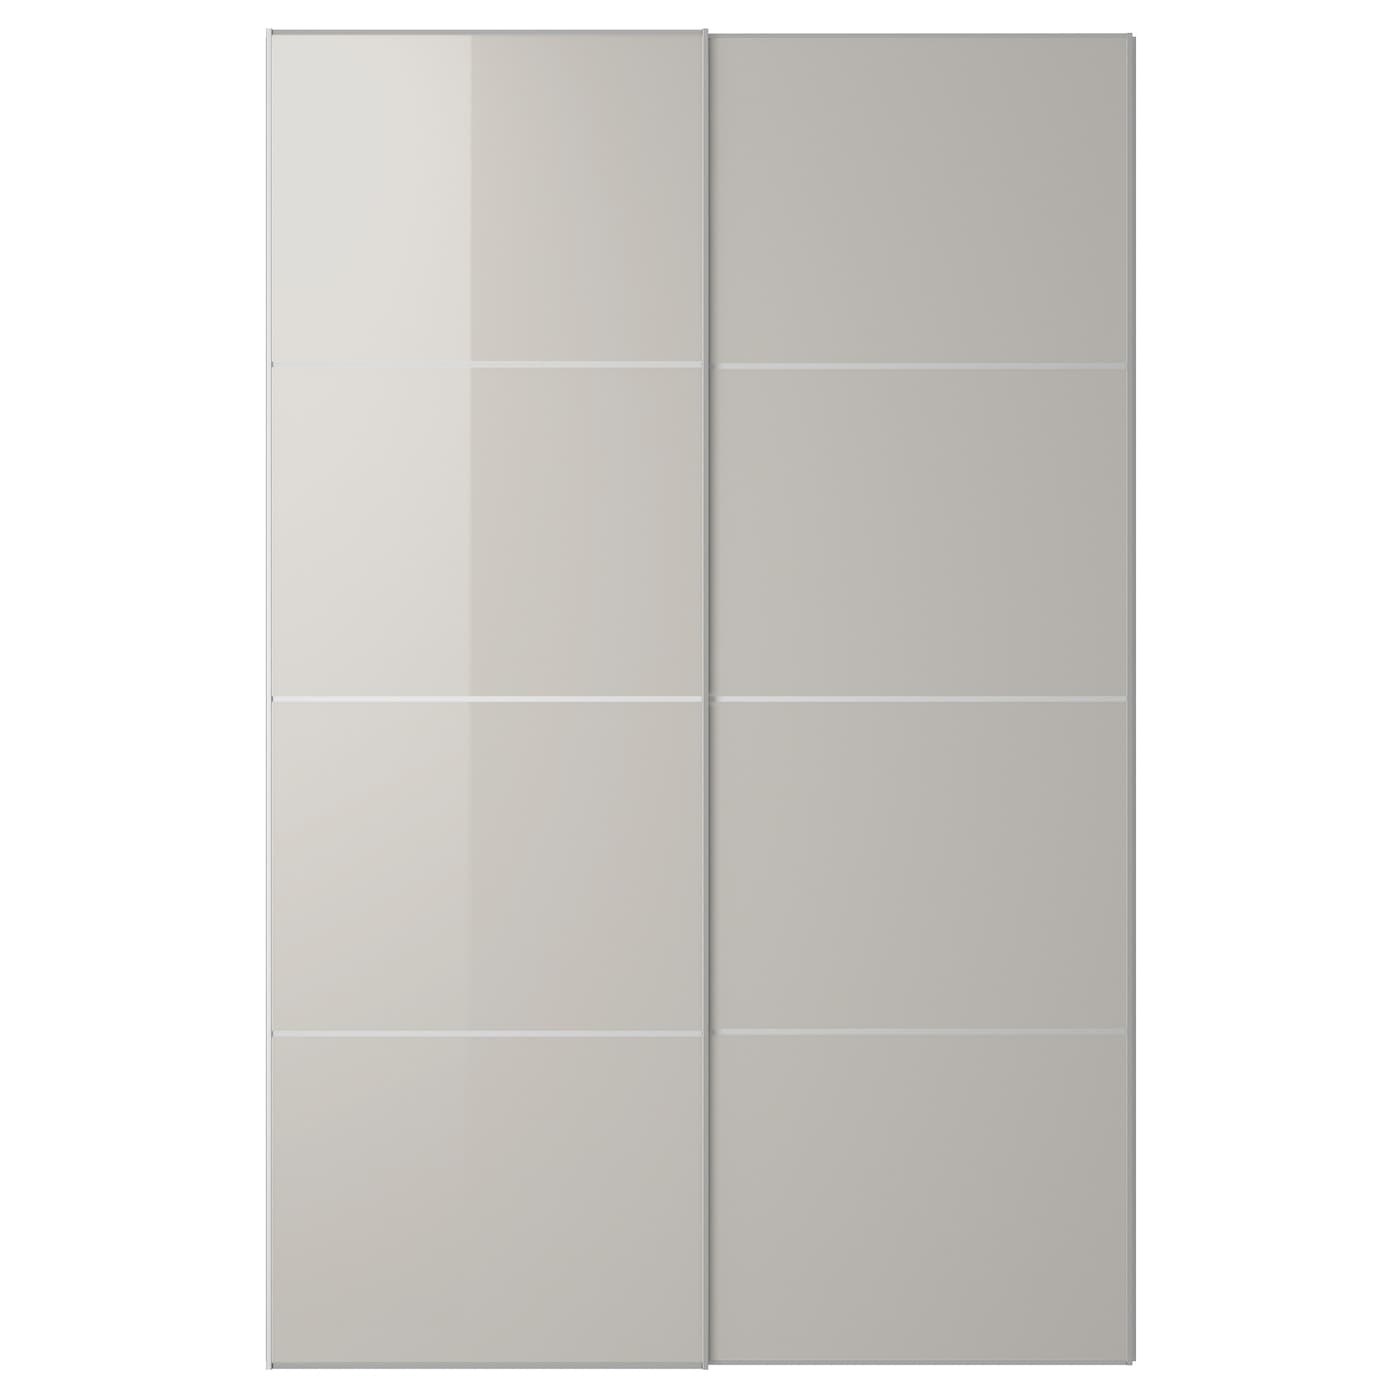 Пара раздвижных дверных рам - IKEA HOKKSUND /ХОККСУНД ИКЕА, 150х236 см, серый